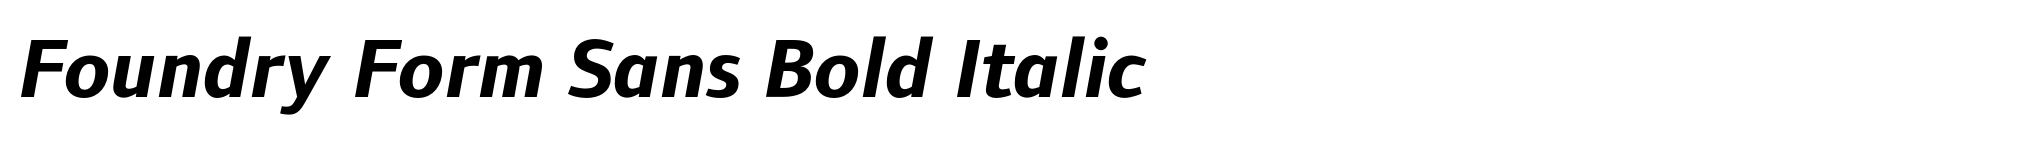 Foundry Form Sans Bold Italic image